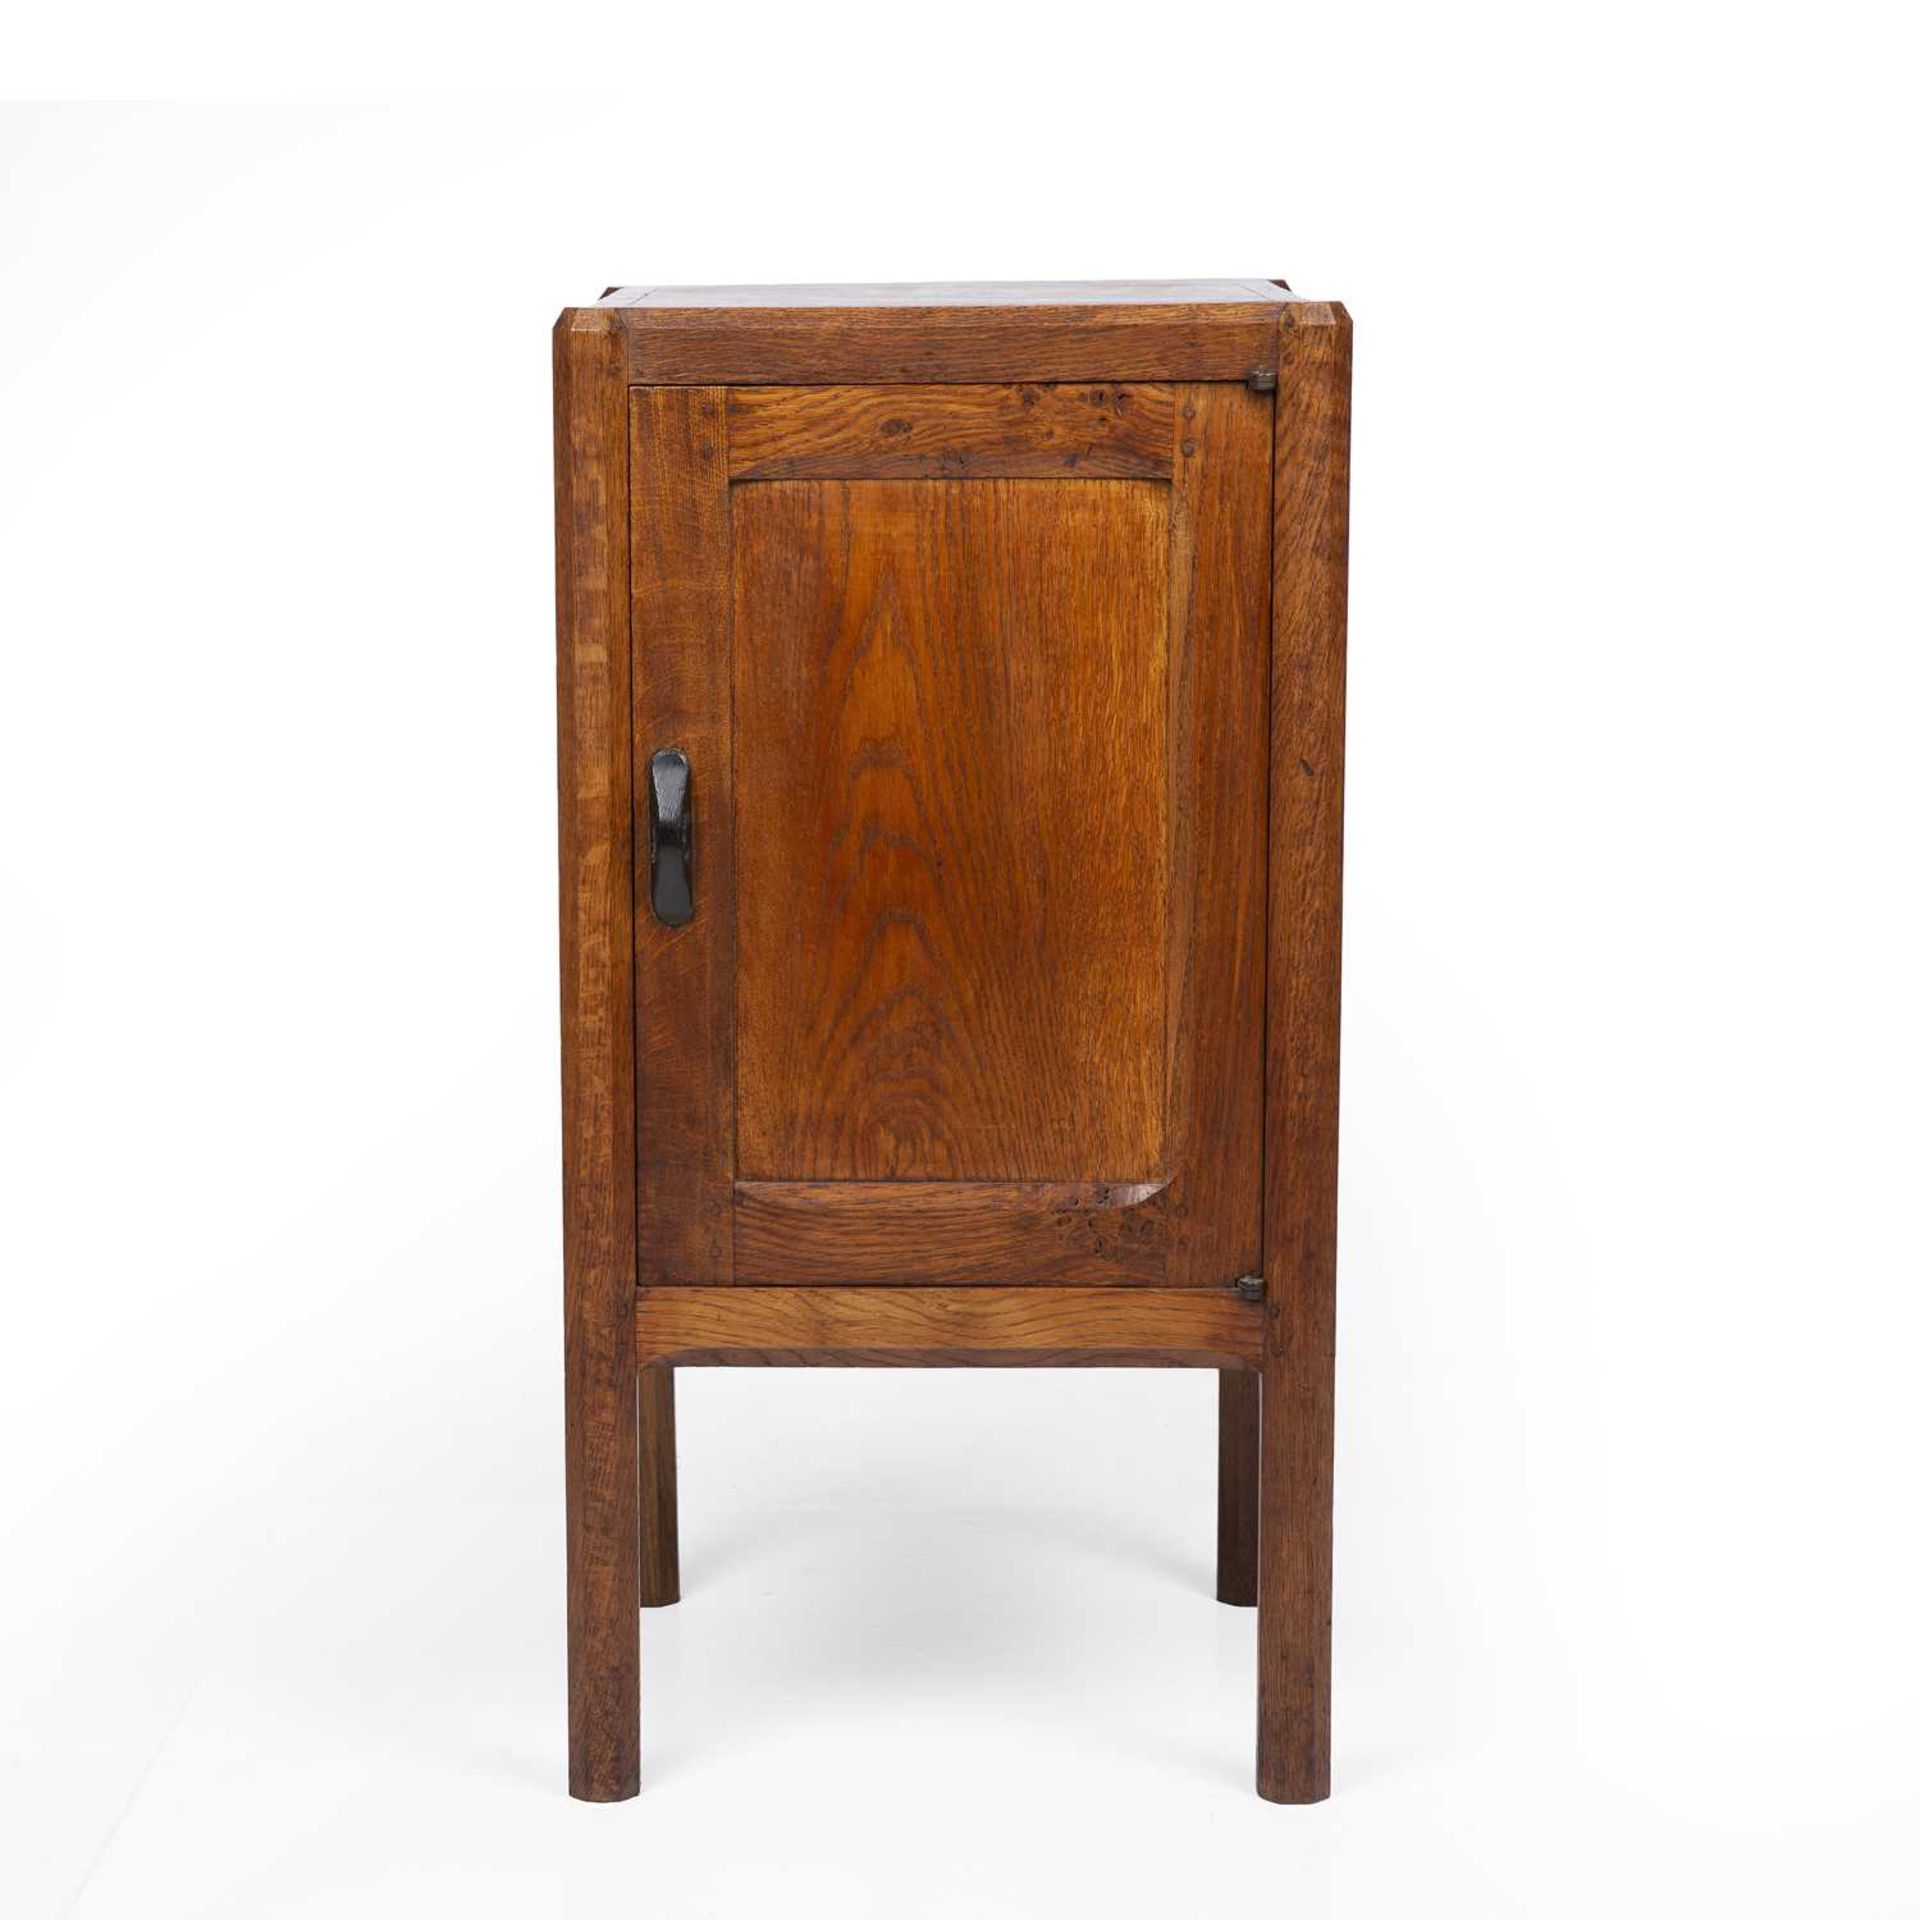 Gordon Russell (1892-1980) Small cupboard/bedside cabinet oak, with a cupboard door enclosing two